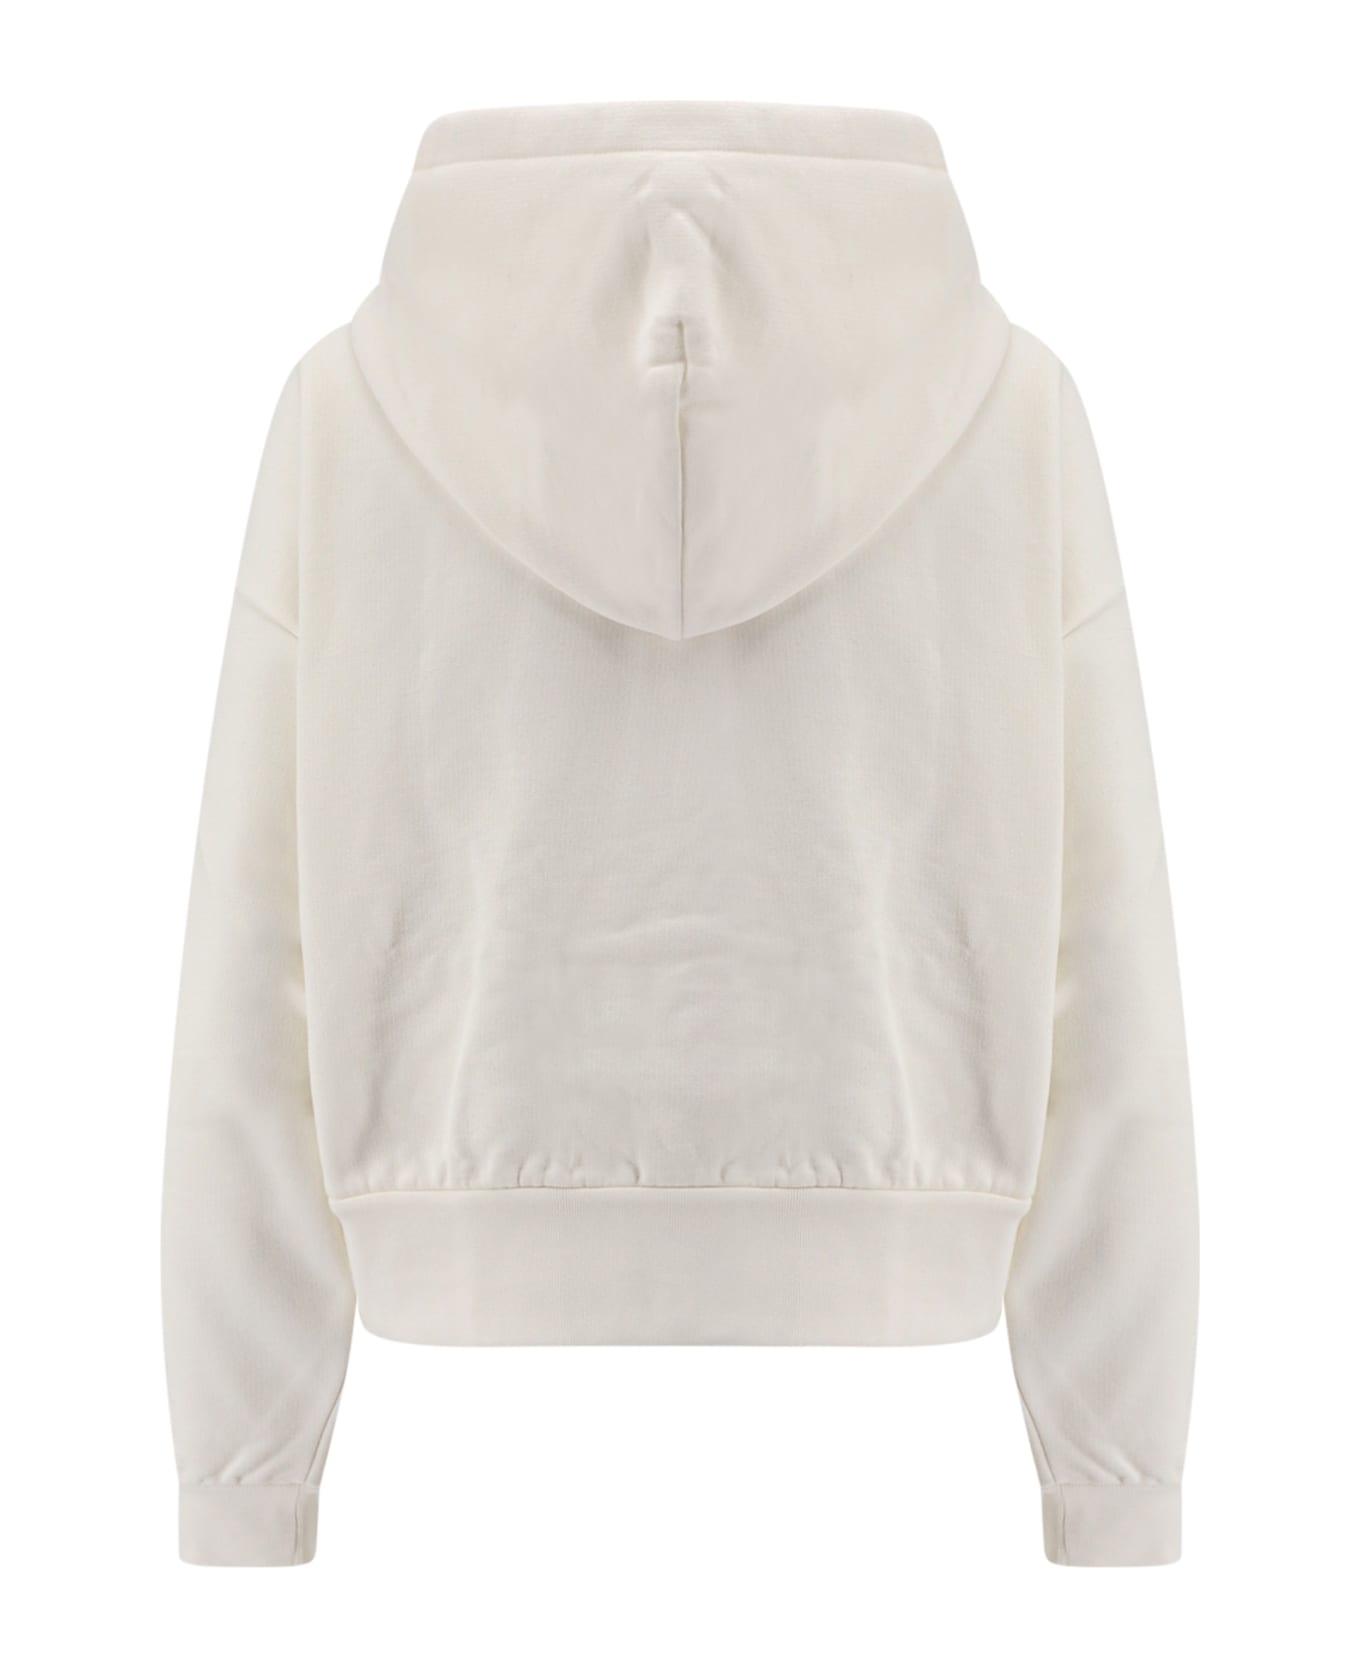 Gucci Sweatshirt - White ジャケット